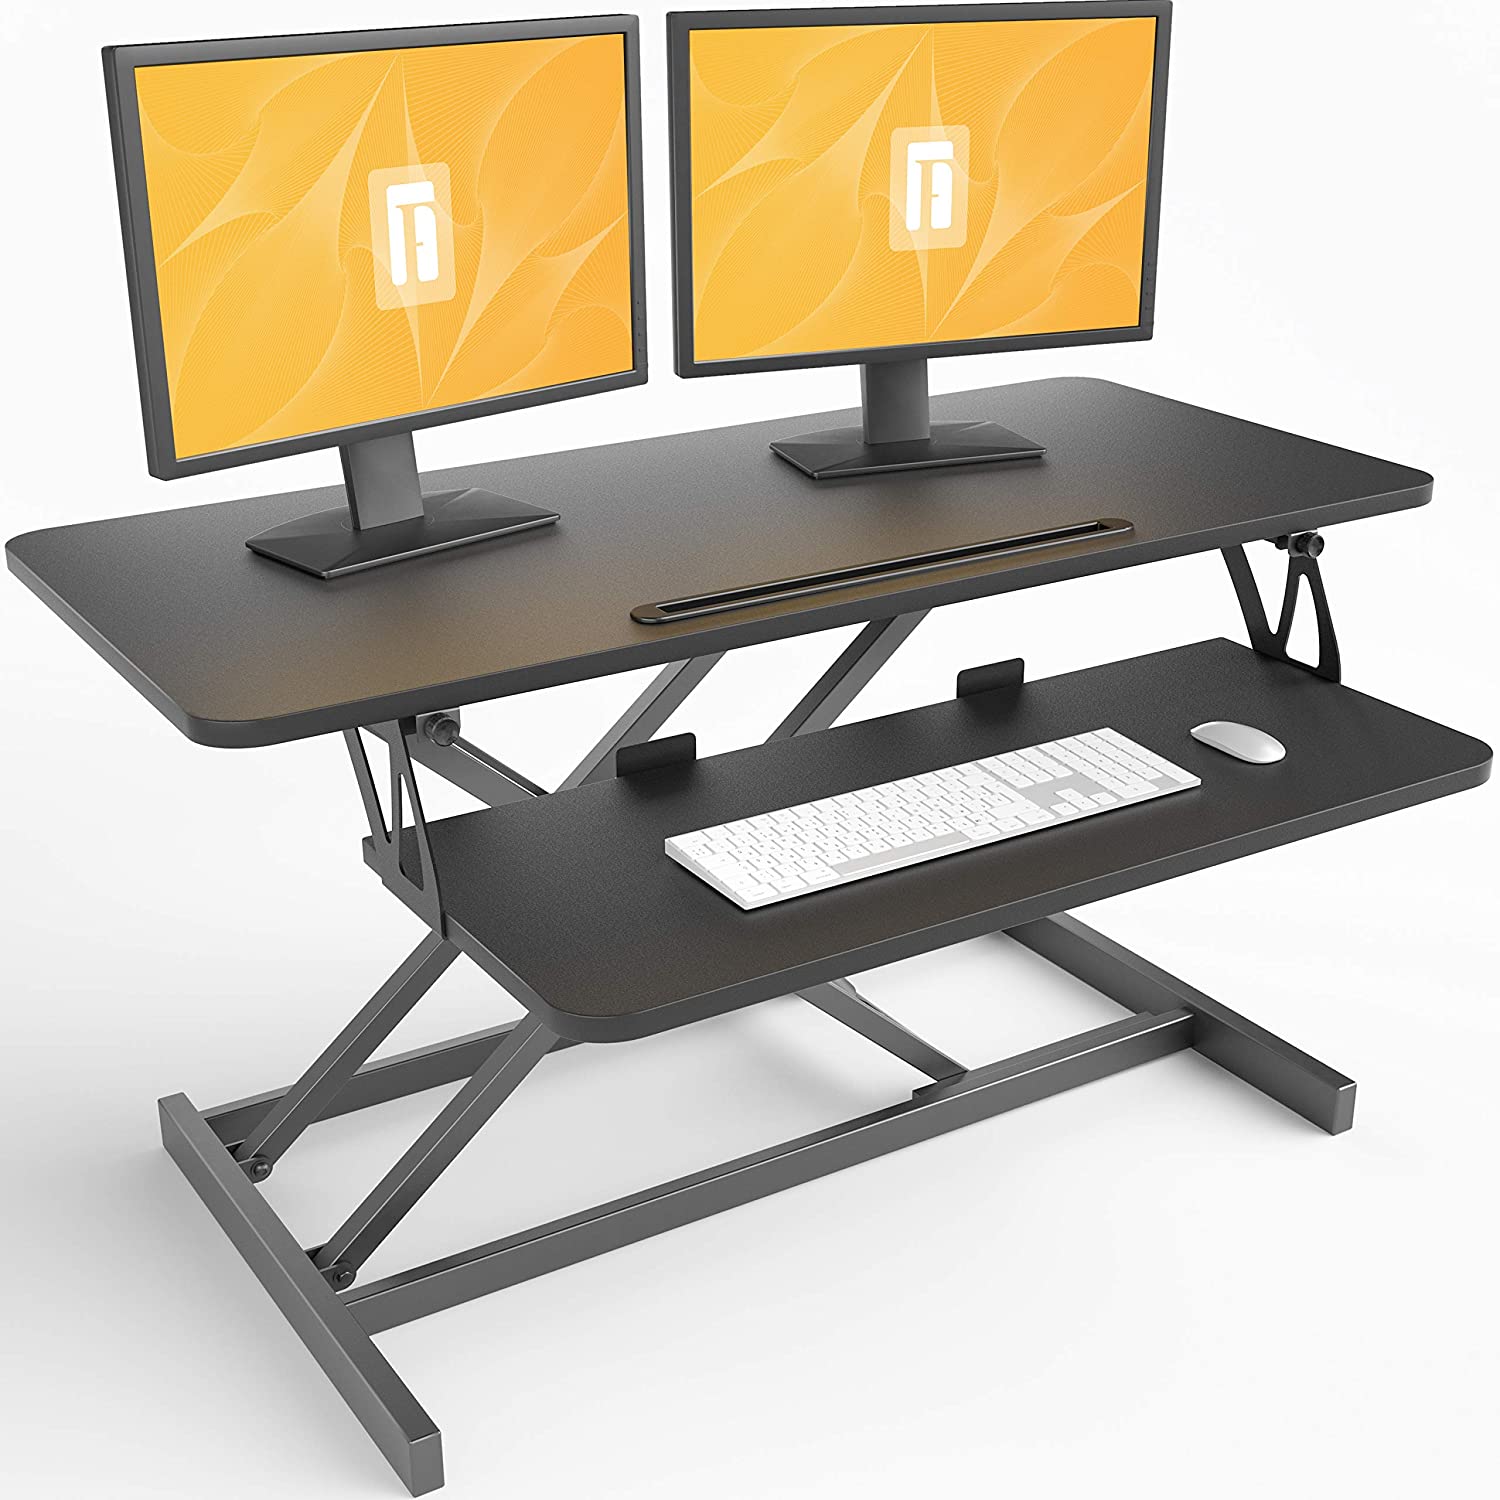 FEZIBO Standing Desk Converter 36 inches Sit Stand Desk Riser